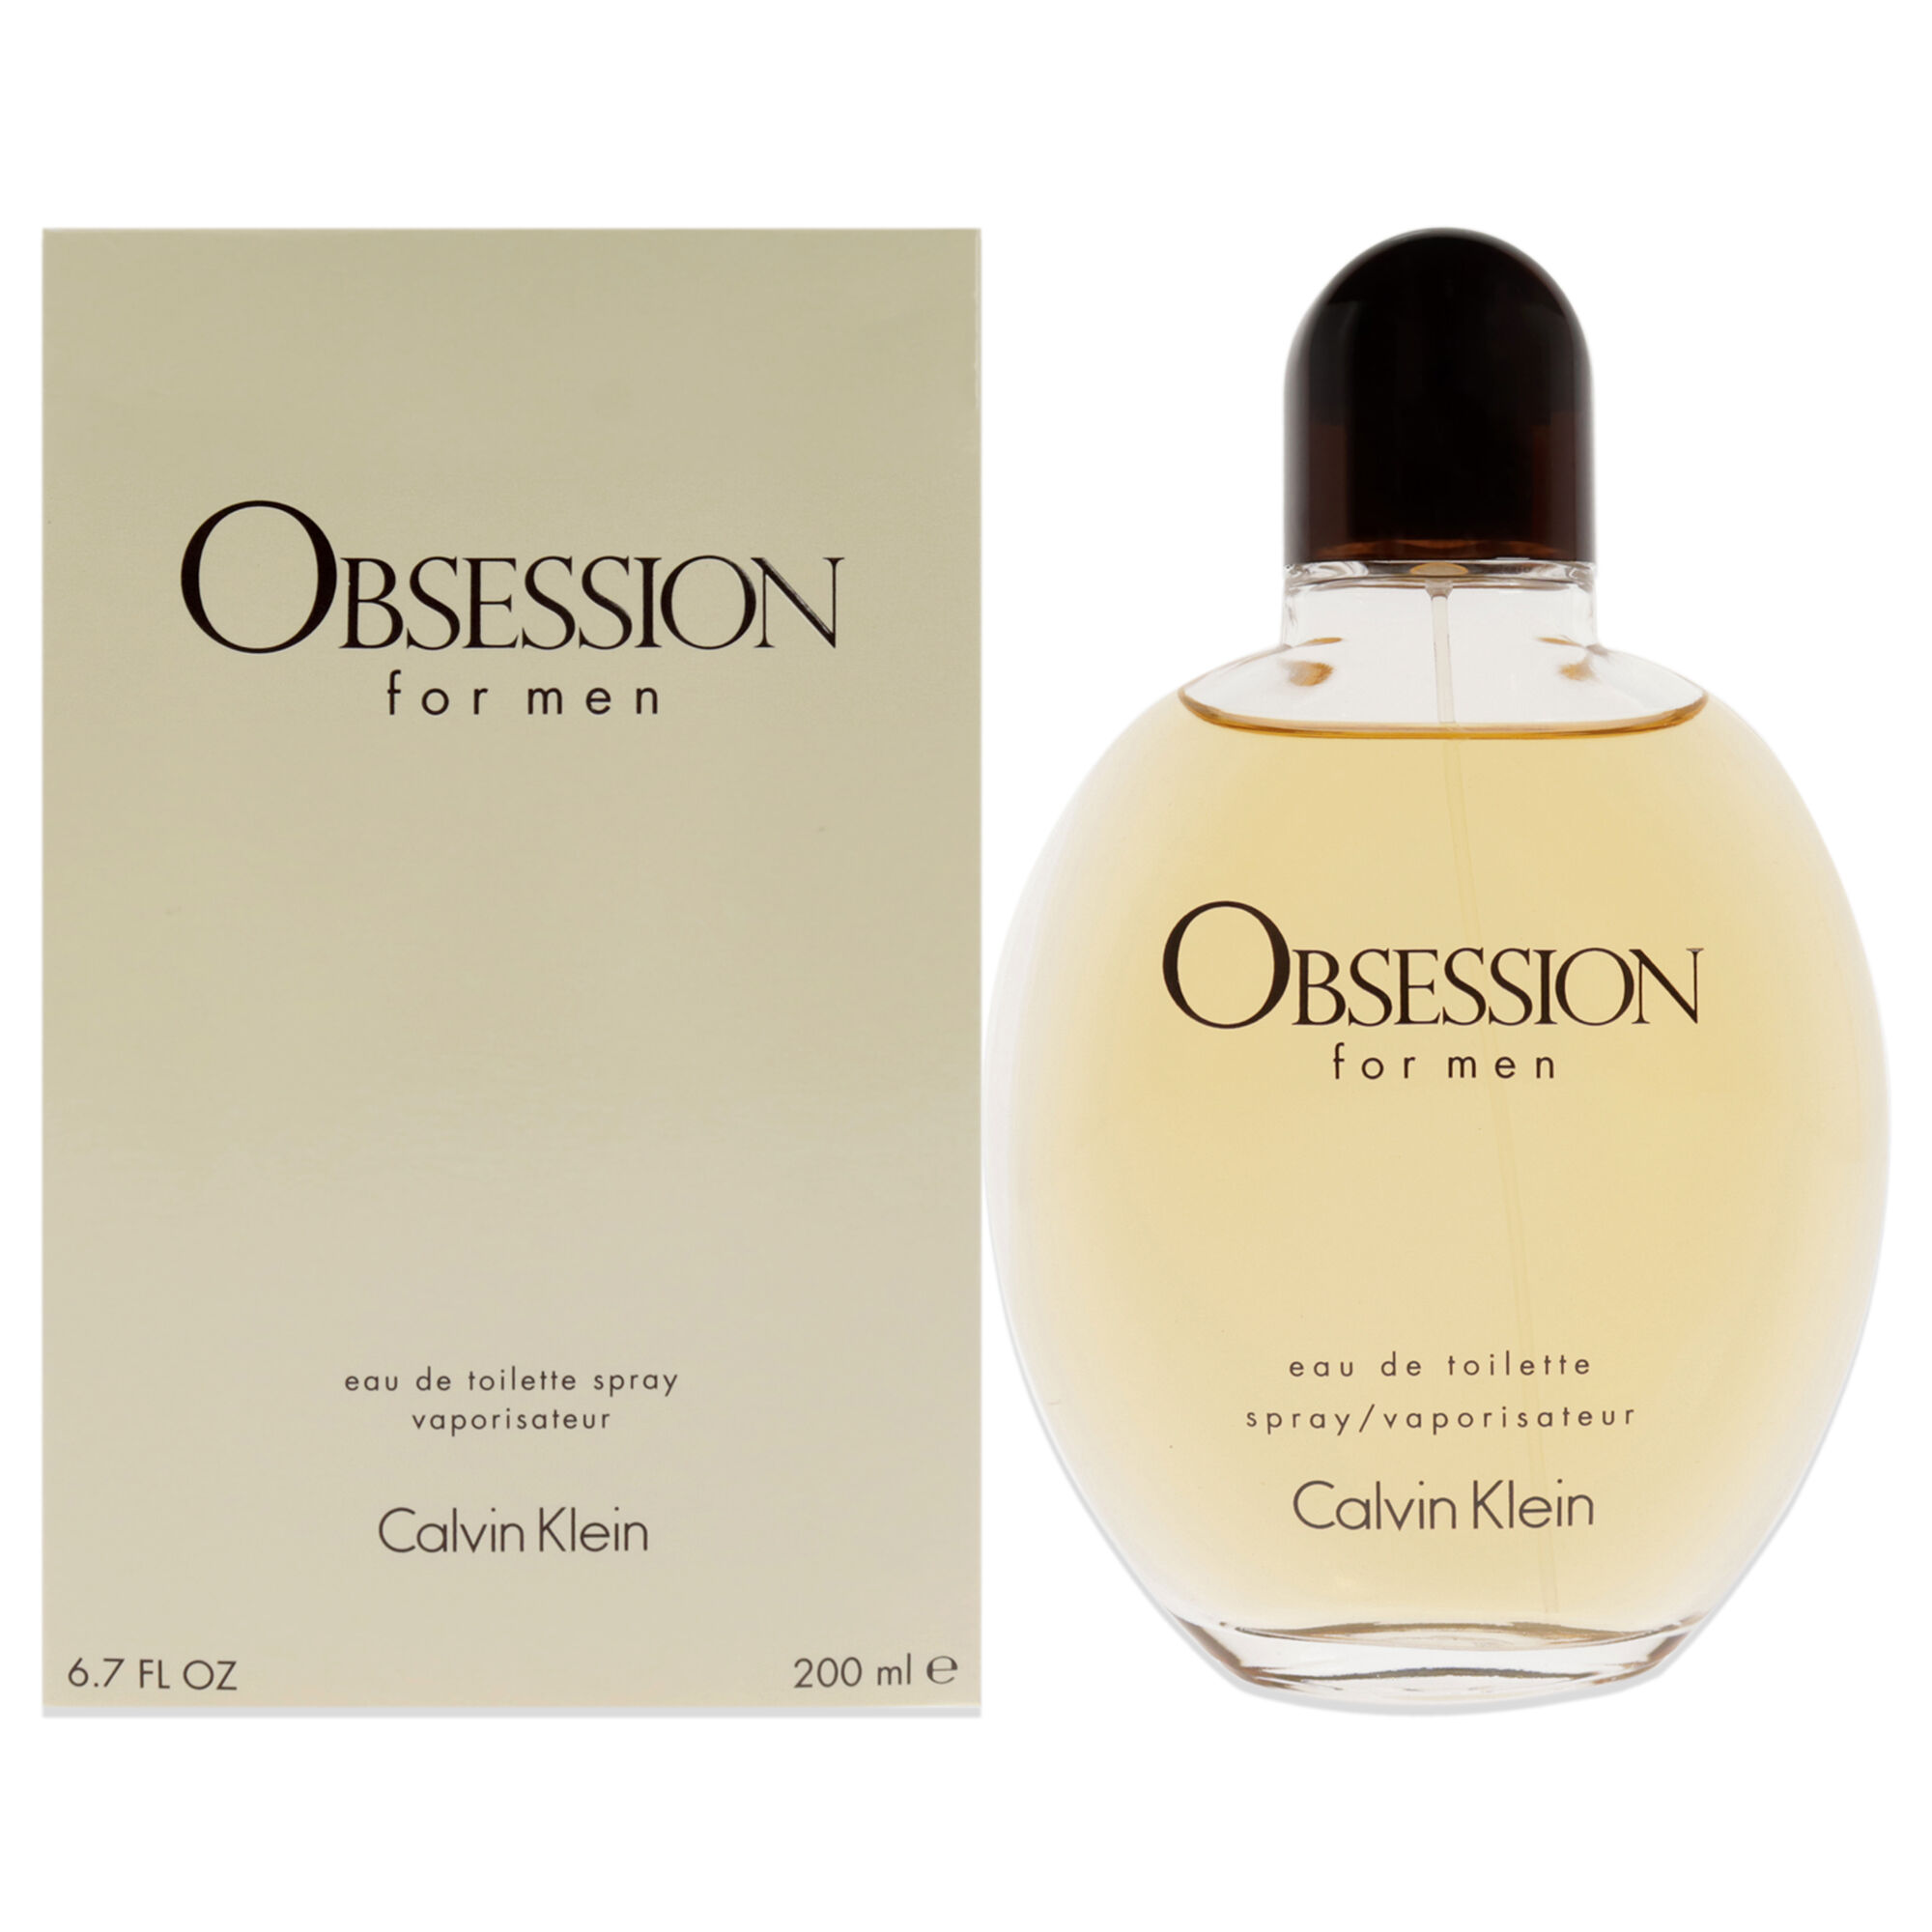 Calvin Klein Obsession for Men Eau de Toilette Spray - 6.7 oz.